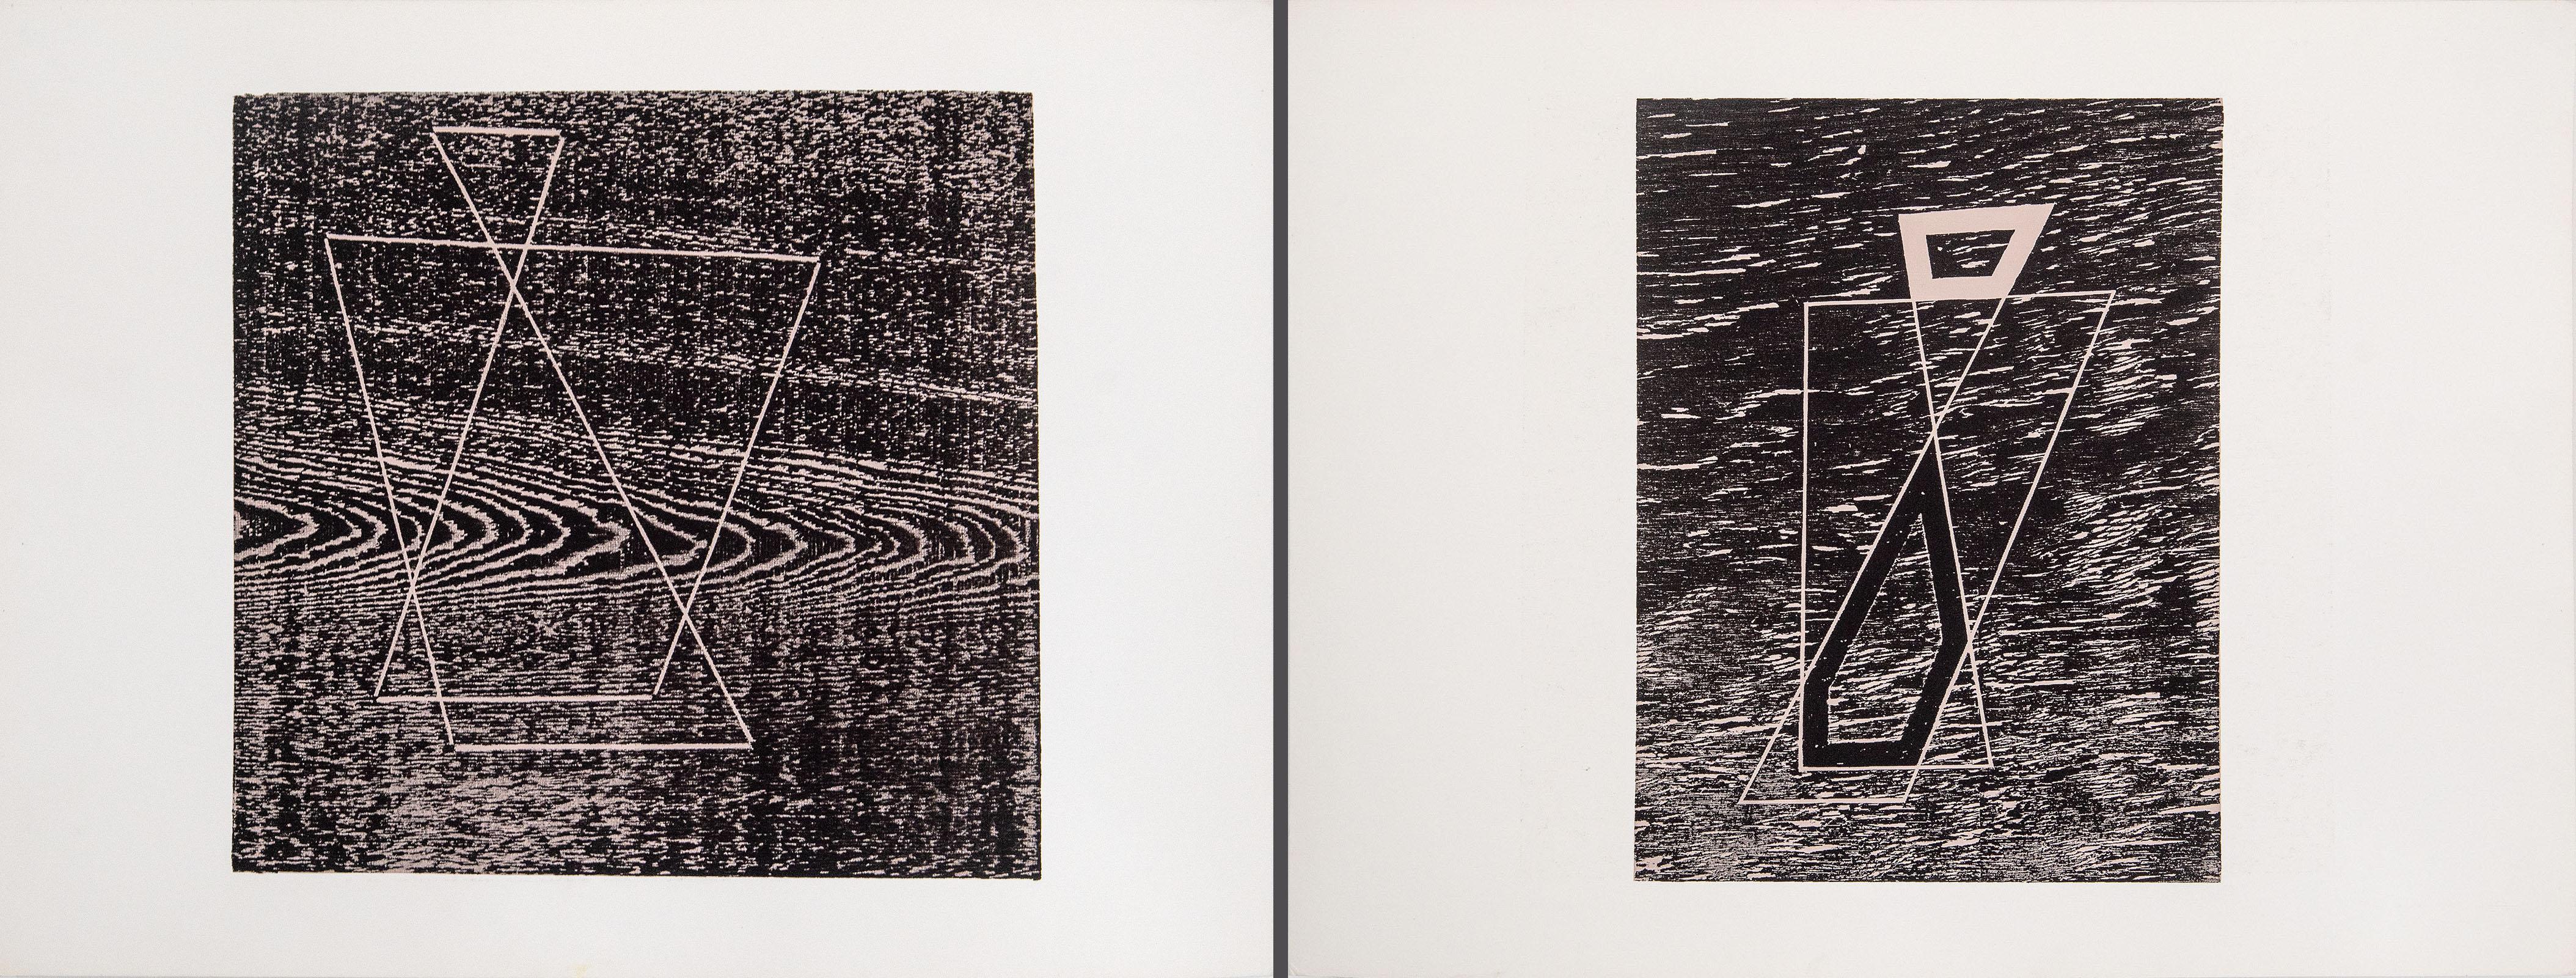 Josef Albers Abstract Print – Formulation: Artikulation. Folio aus 2 Drucken